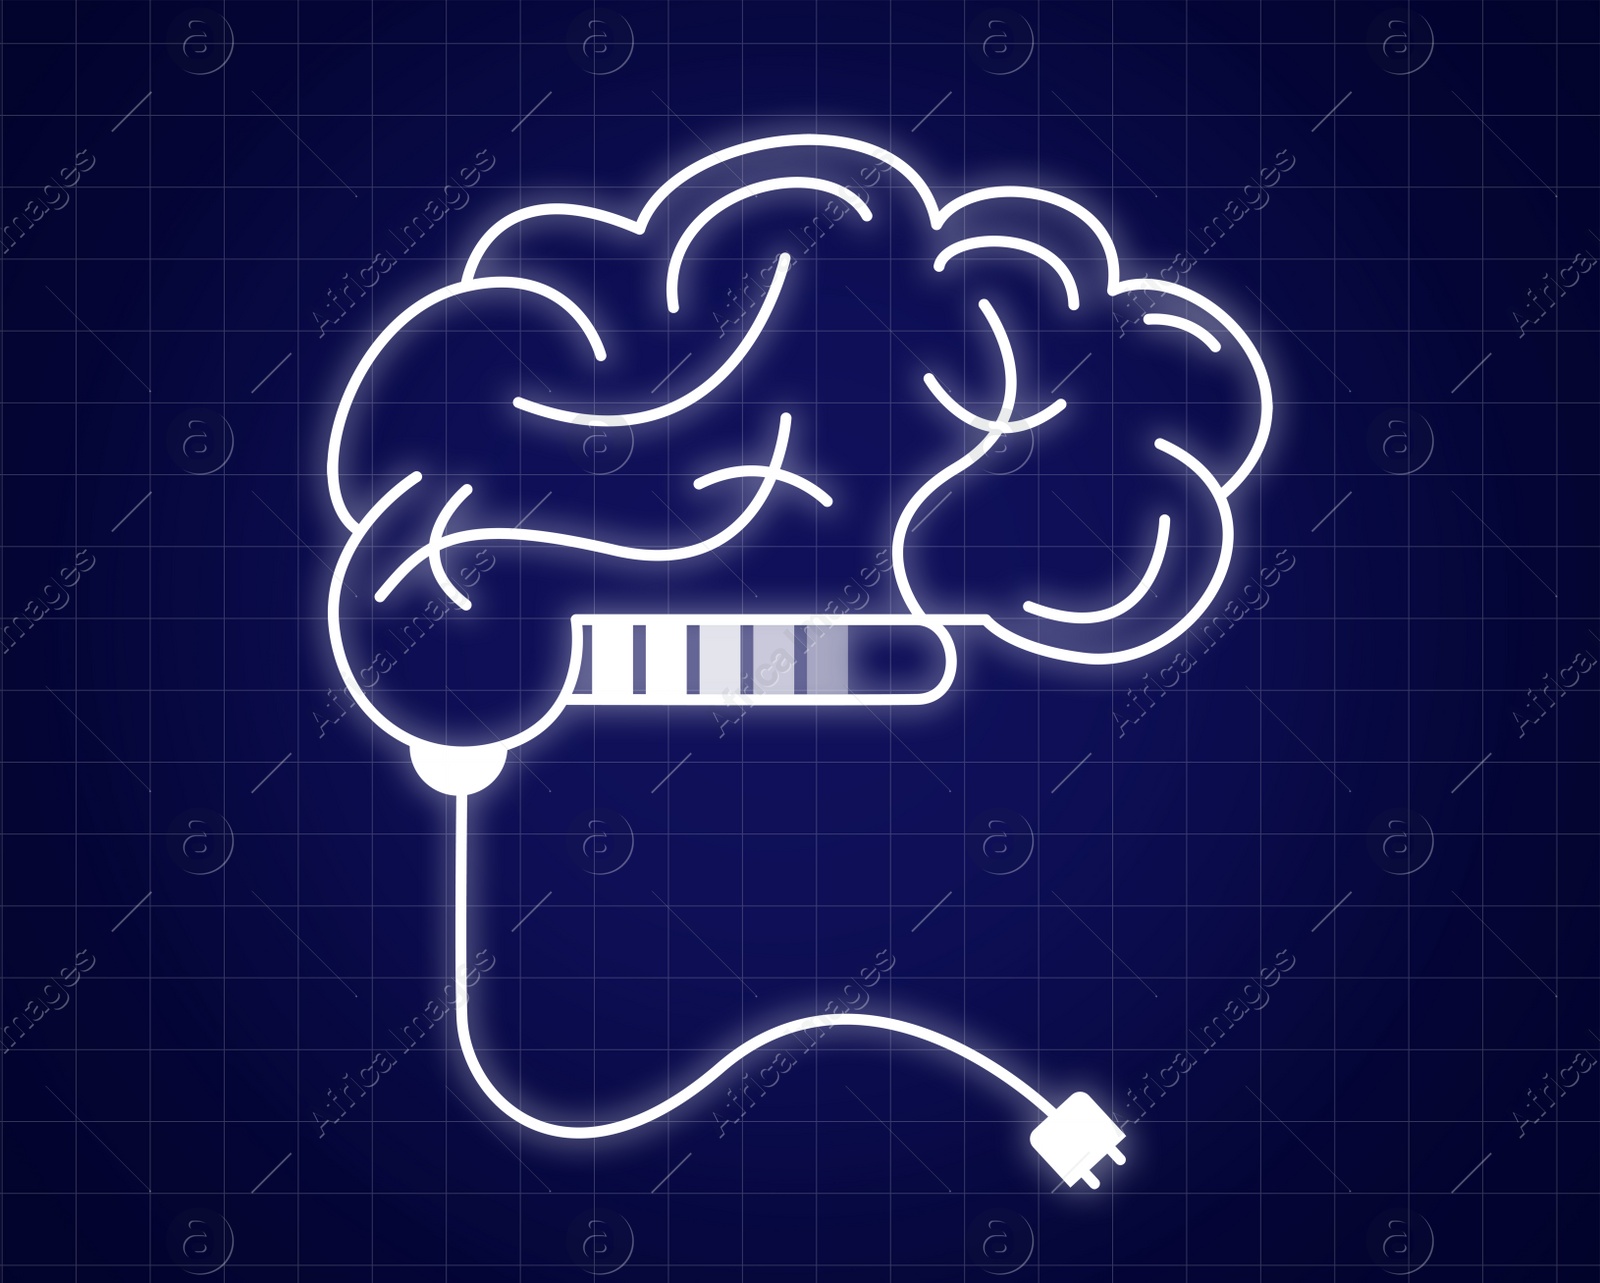 Illustration of  human brain with plug on blue background